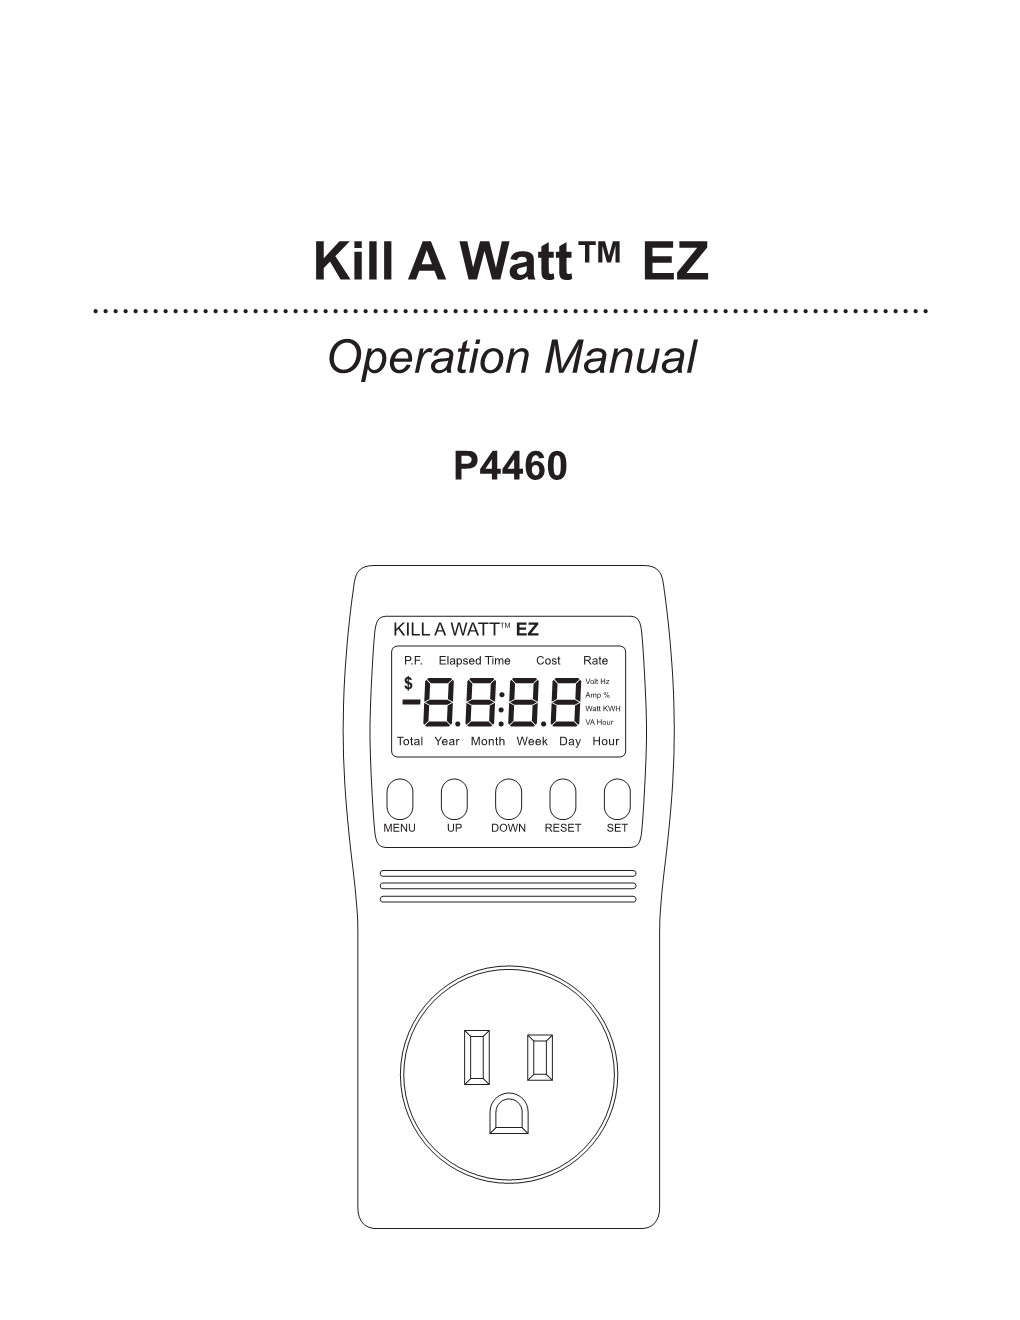 Kill a Watt EZ Operation Manual